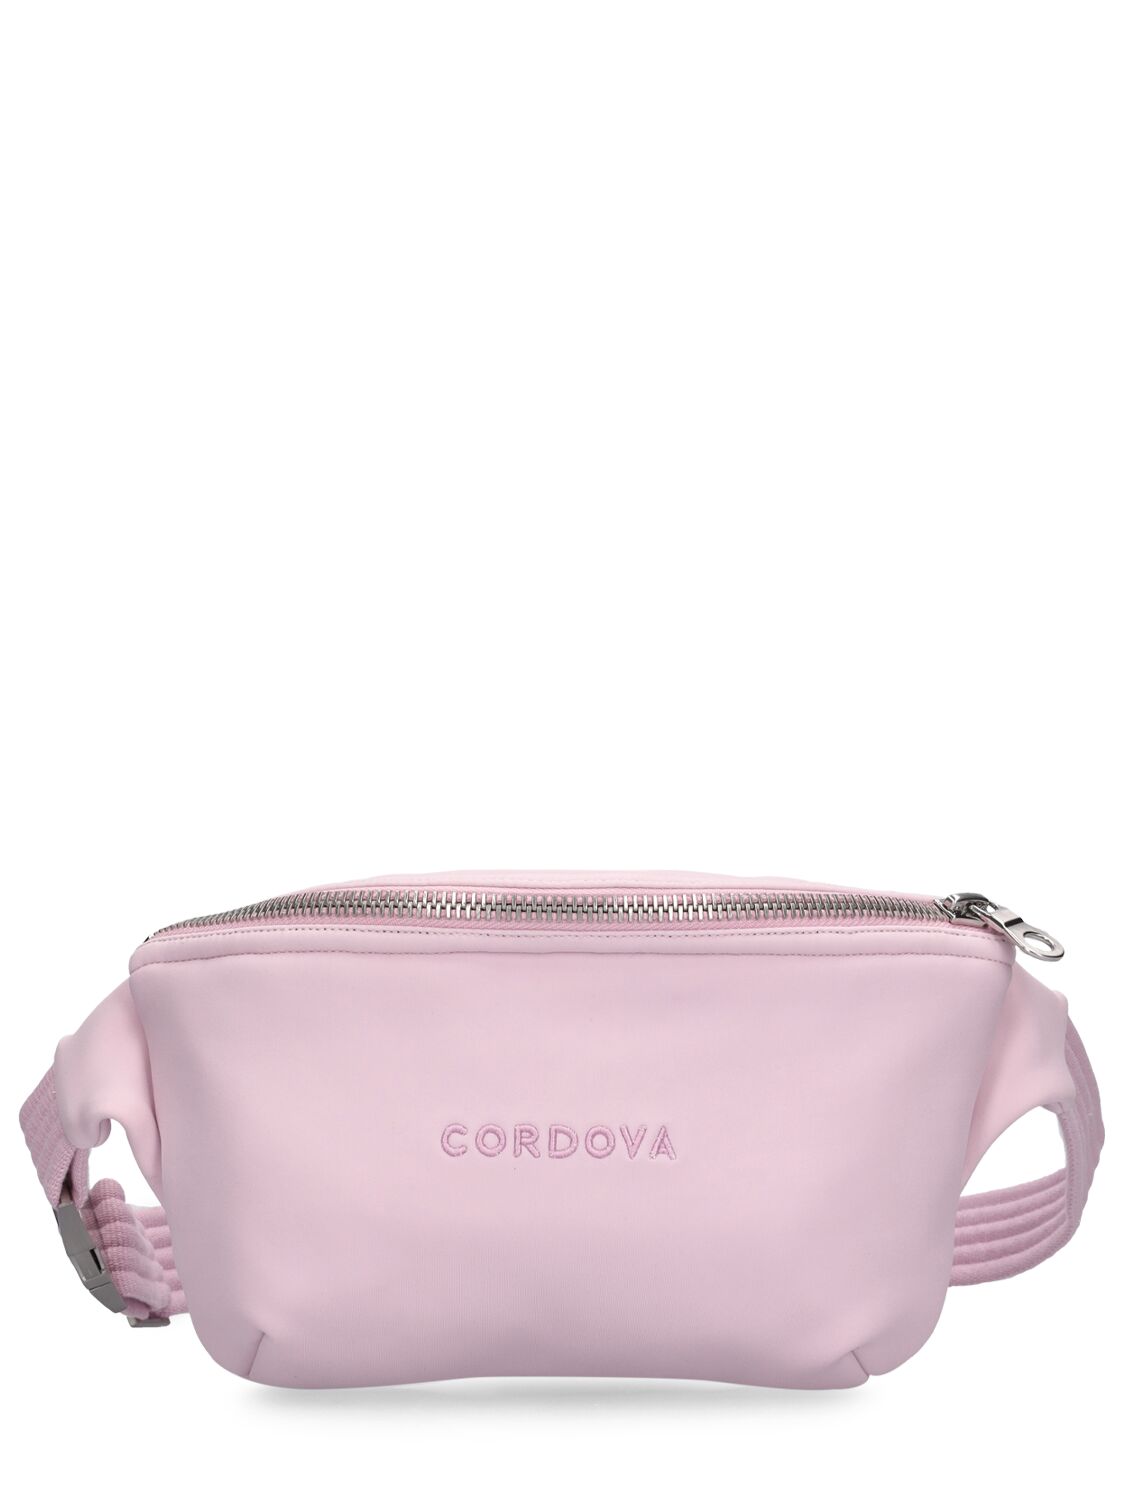 Cordova Belt Bag In Pink